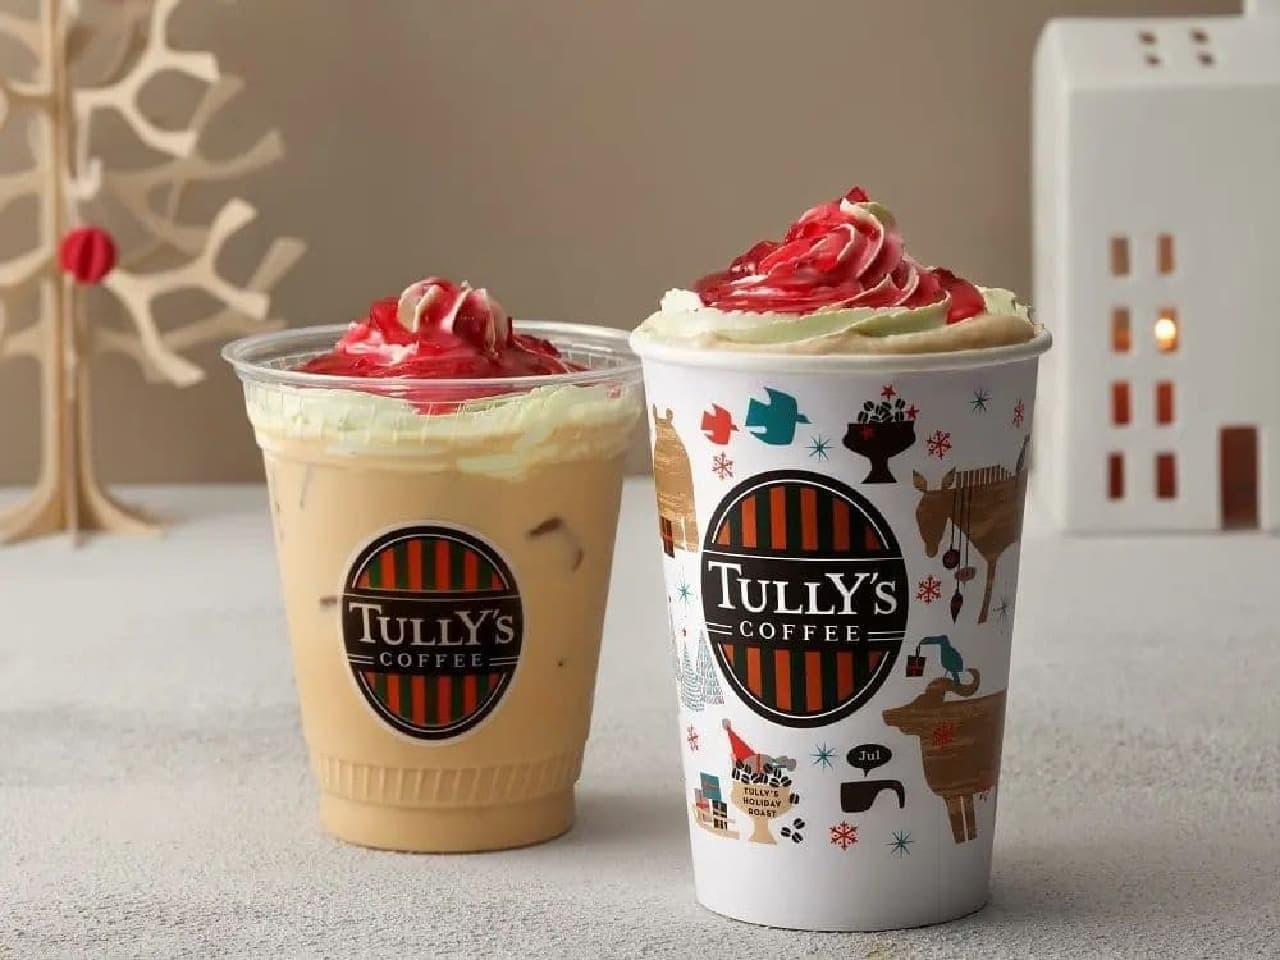 Tully's Coffee "& TEA Pistachio & Berry Milk Tea".